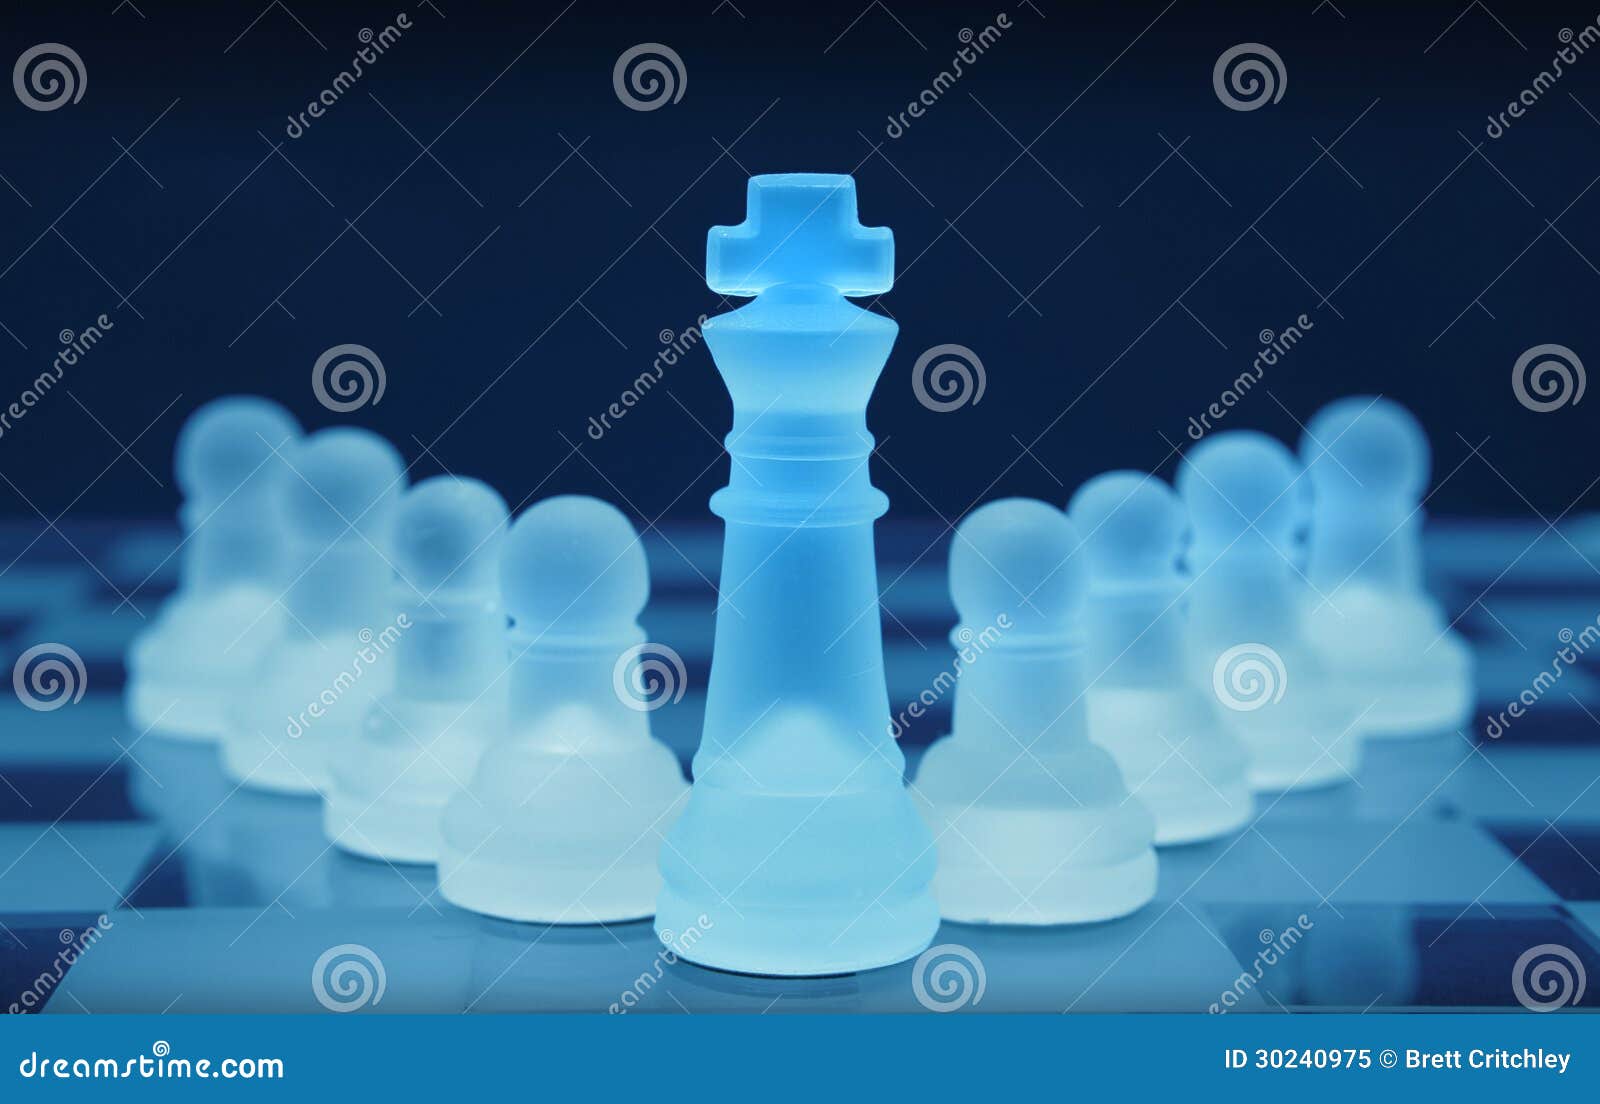 team leader teamwork chess